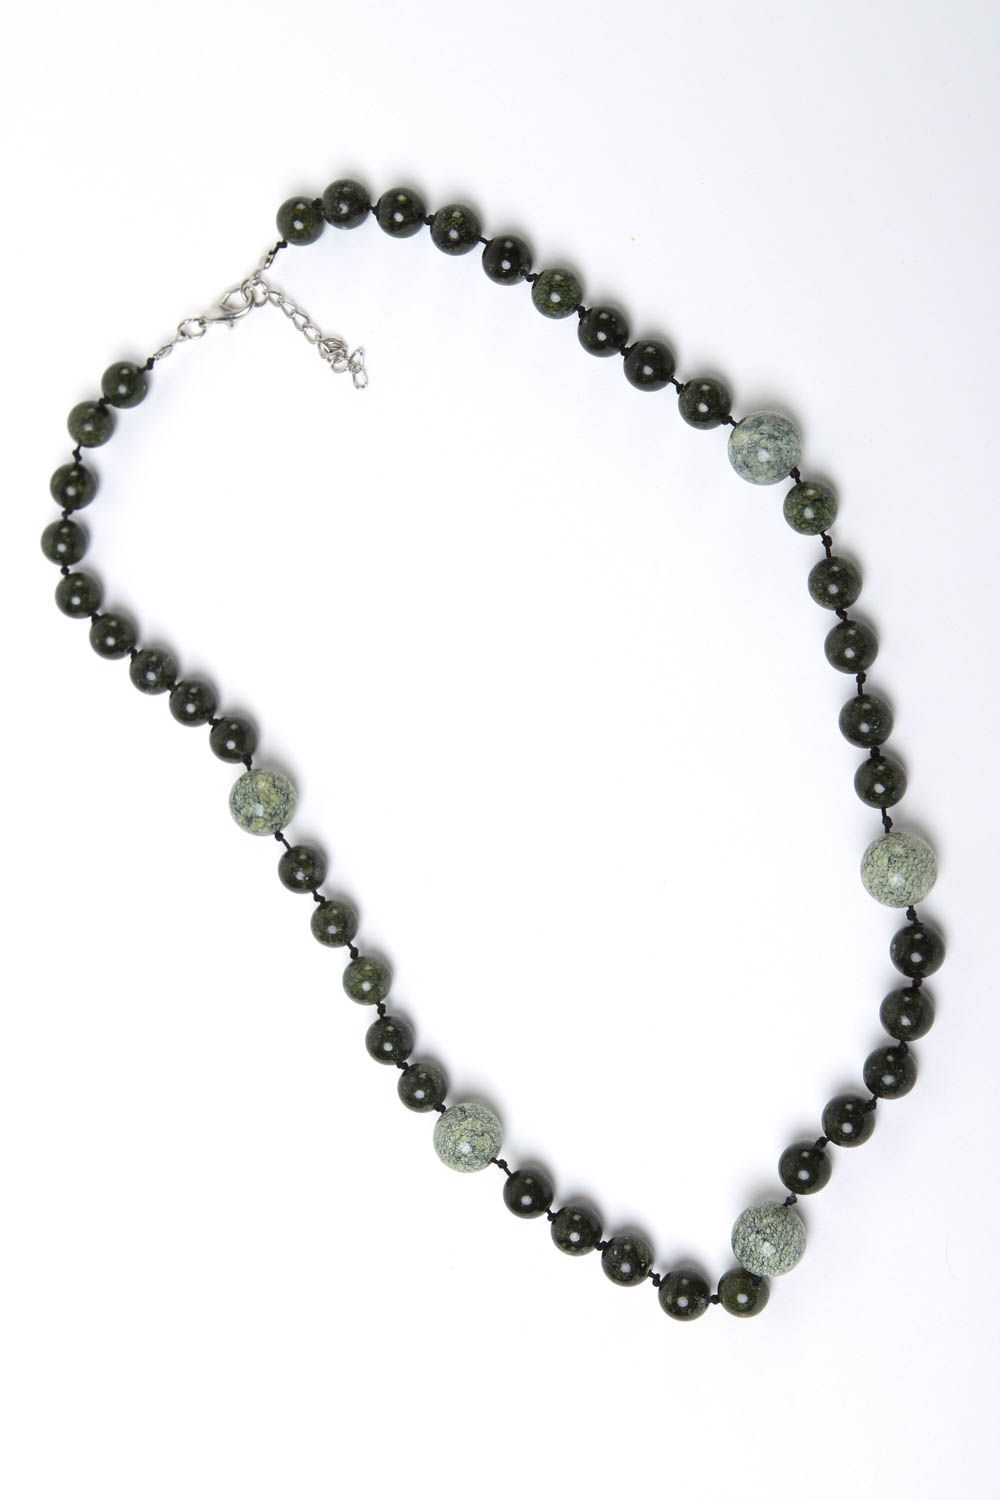 Handmade jewelry designer bead necklace neck accessory stone jewelry gift ideas photo 2